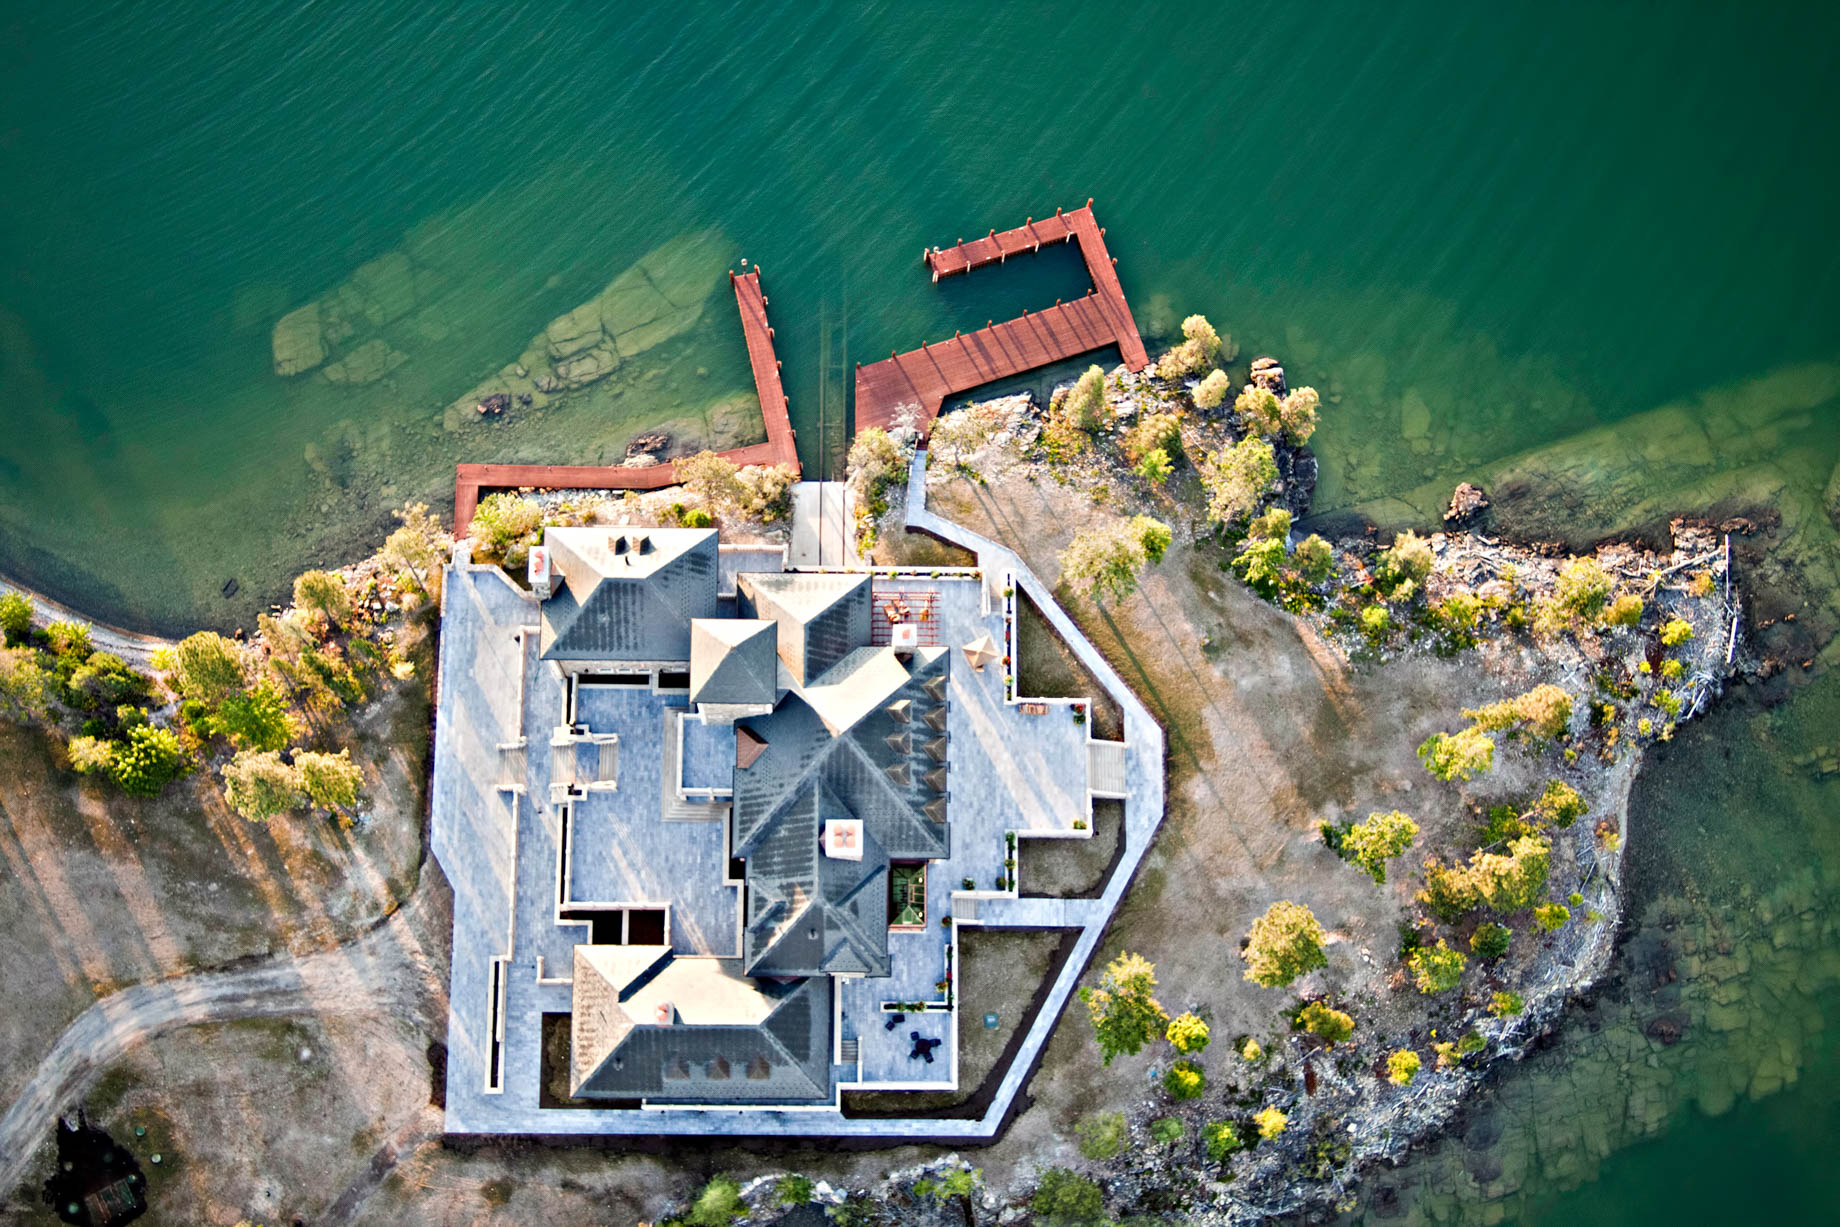 Shelter Island Private Estate - Flathead Lake, Rollins, MT, USA